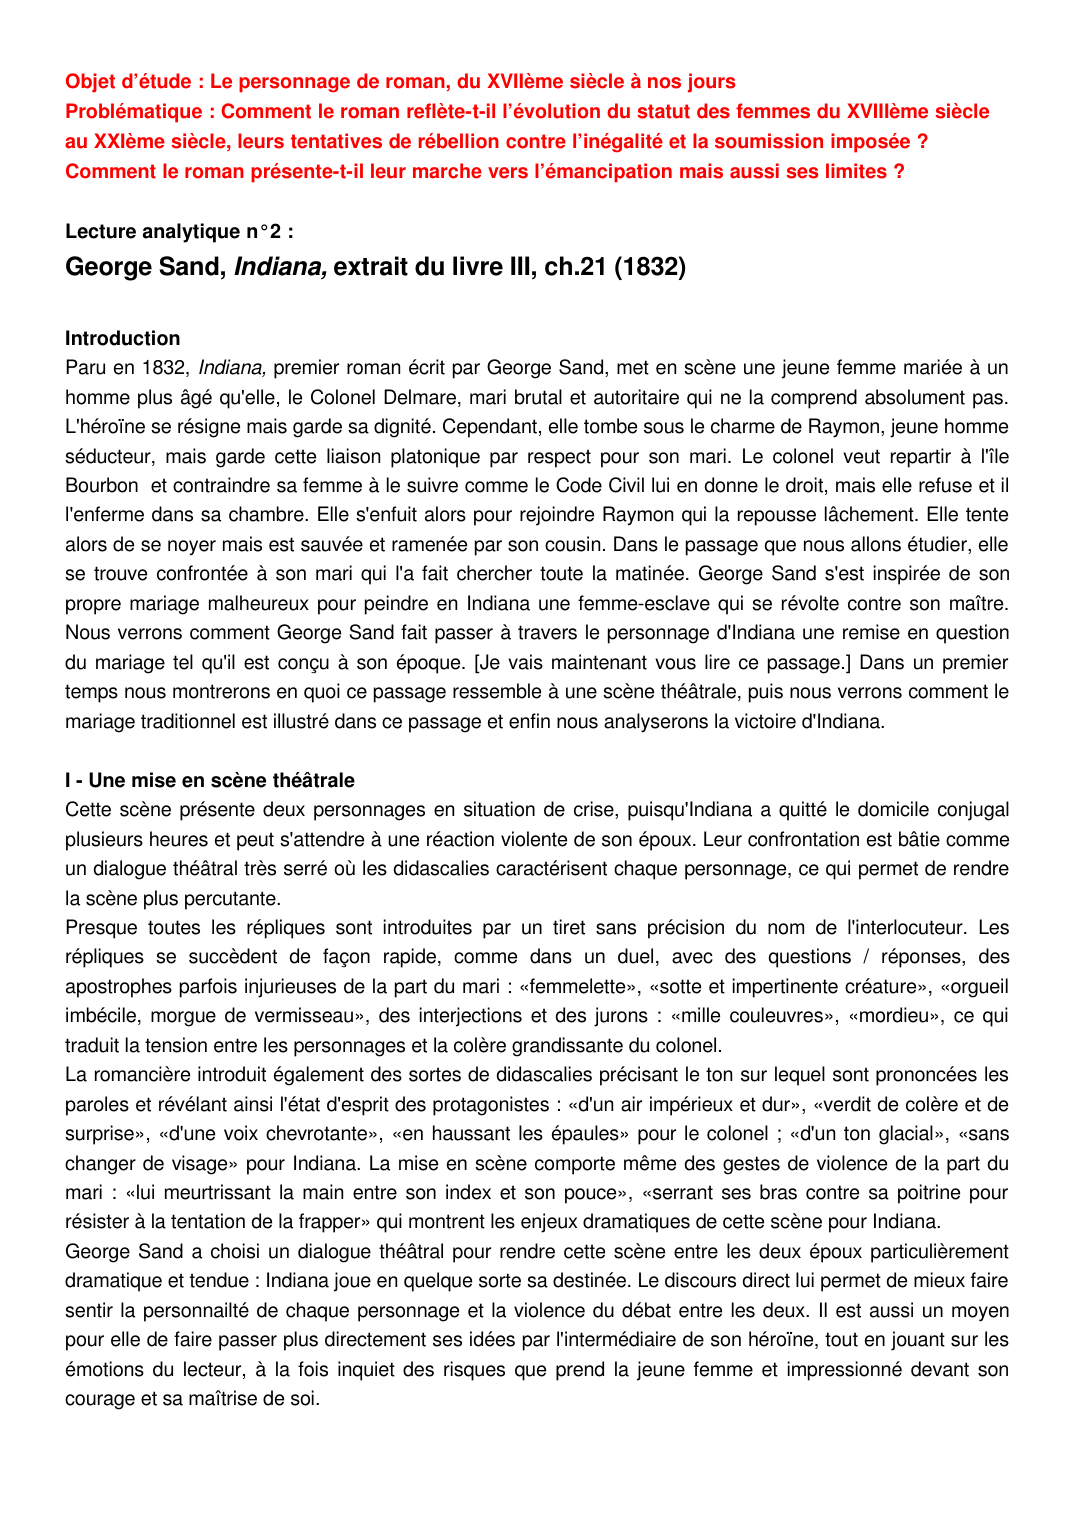 Prévisualisation du document Indiana, George Sand, extrait du livre III, ch. 21